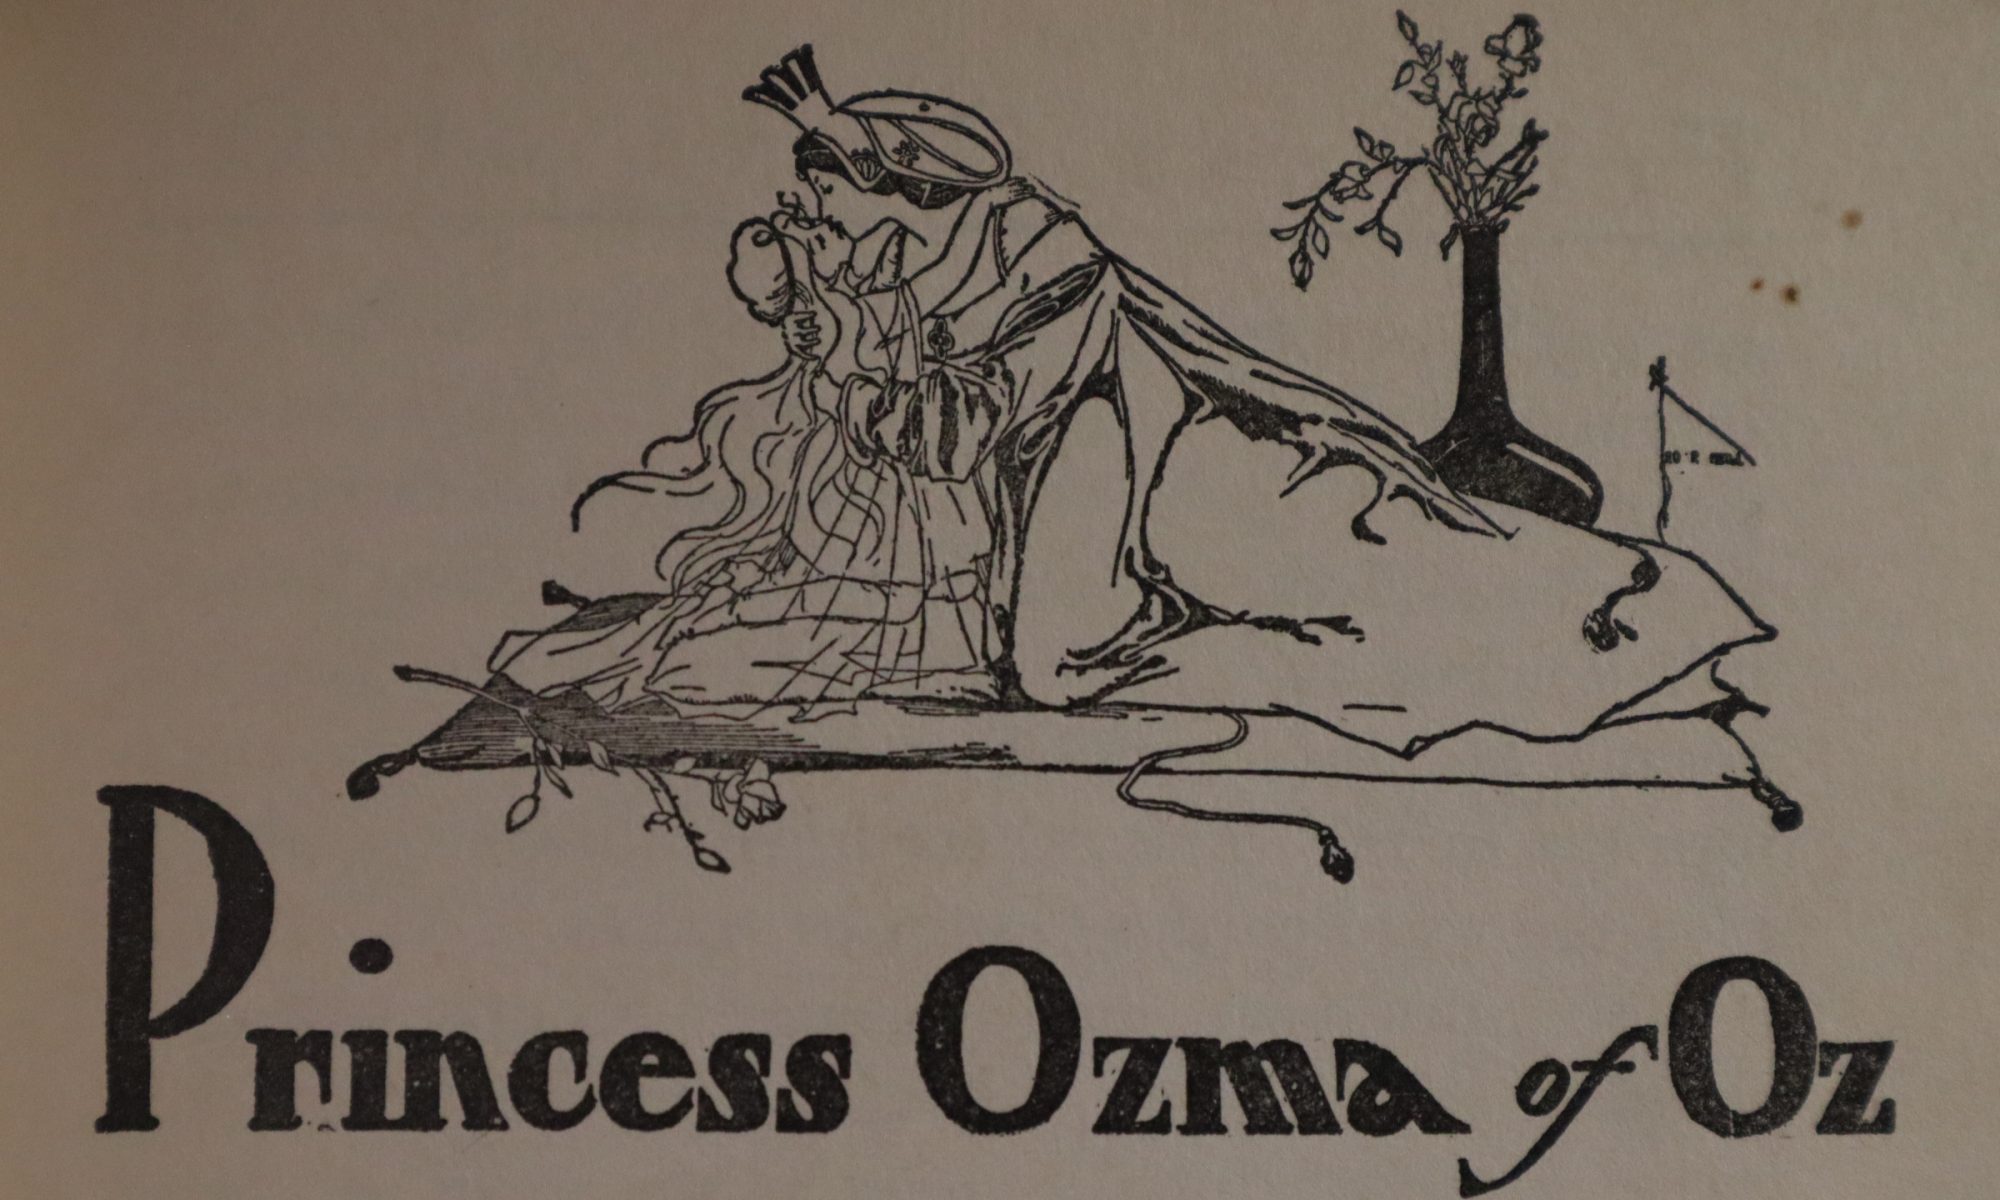 Glinda of Oz kissing Princess Ozma over the text "Princess Ozma of Oz"